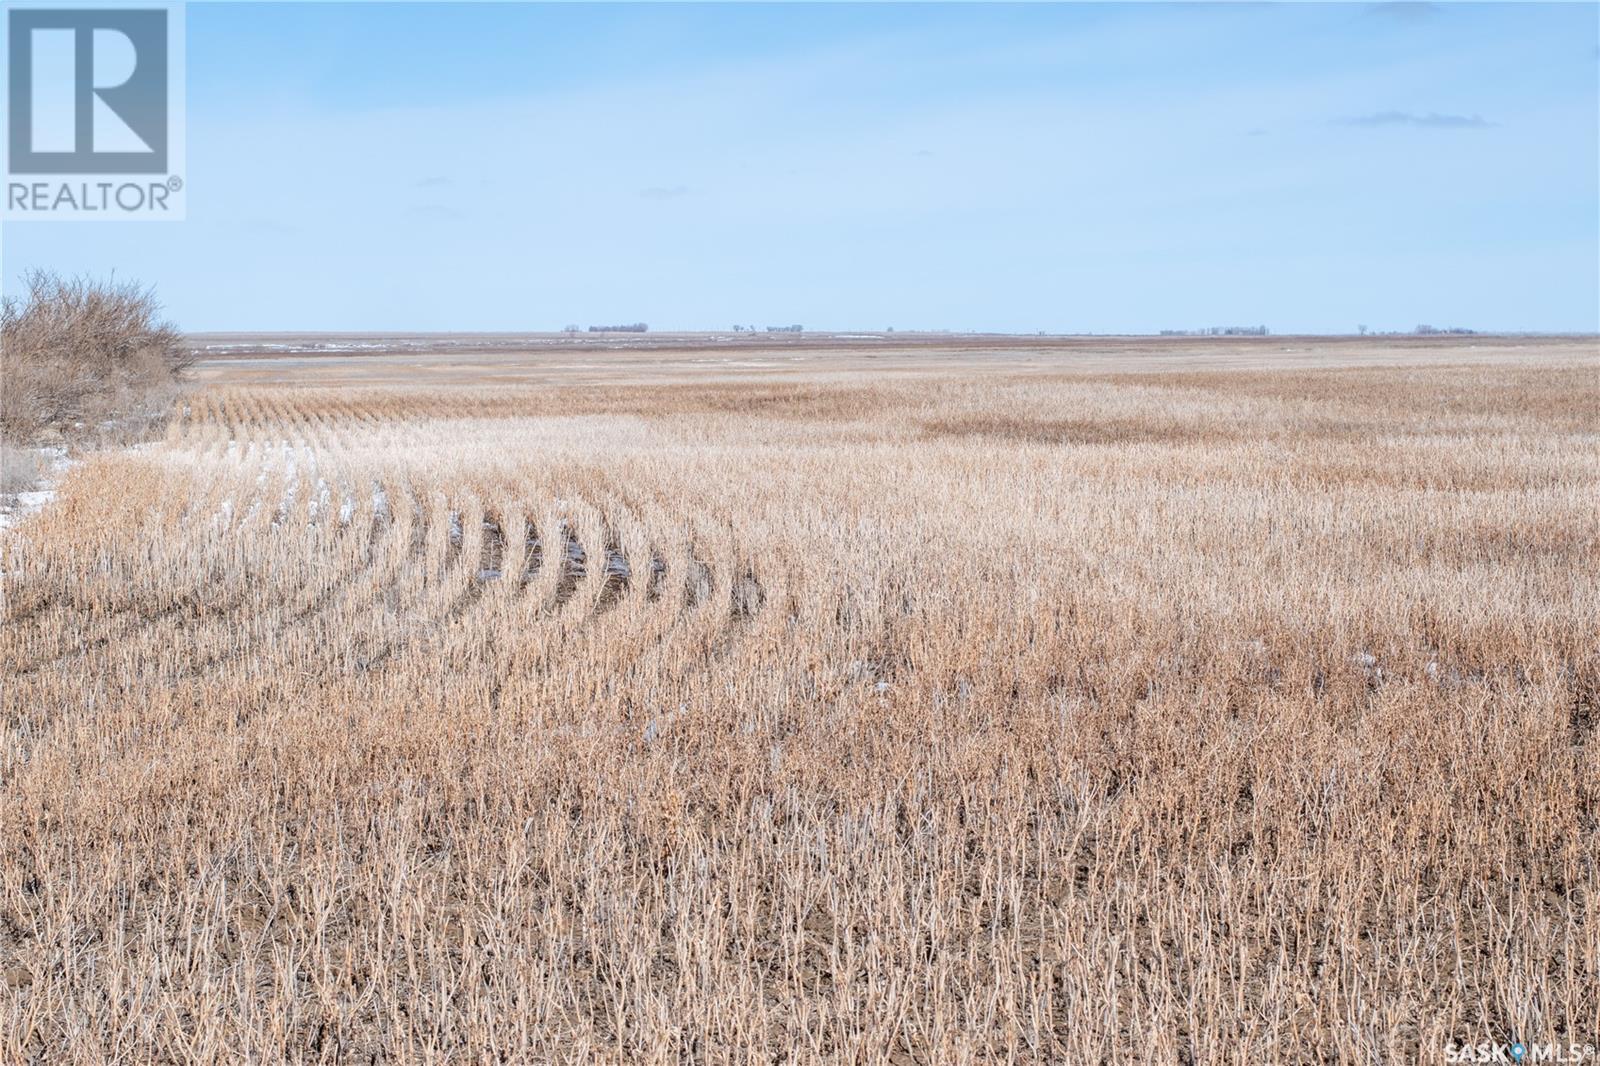 SONMOR LAND-516 acres, monet rm no. 257, Saskatchewan